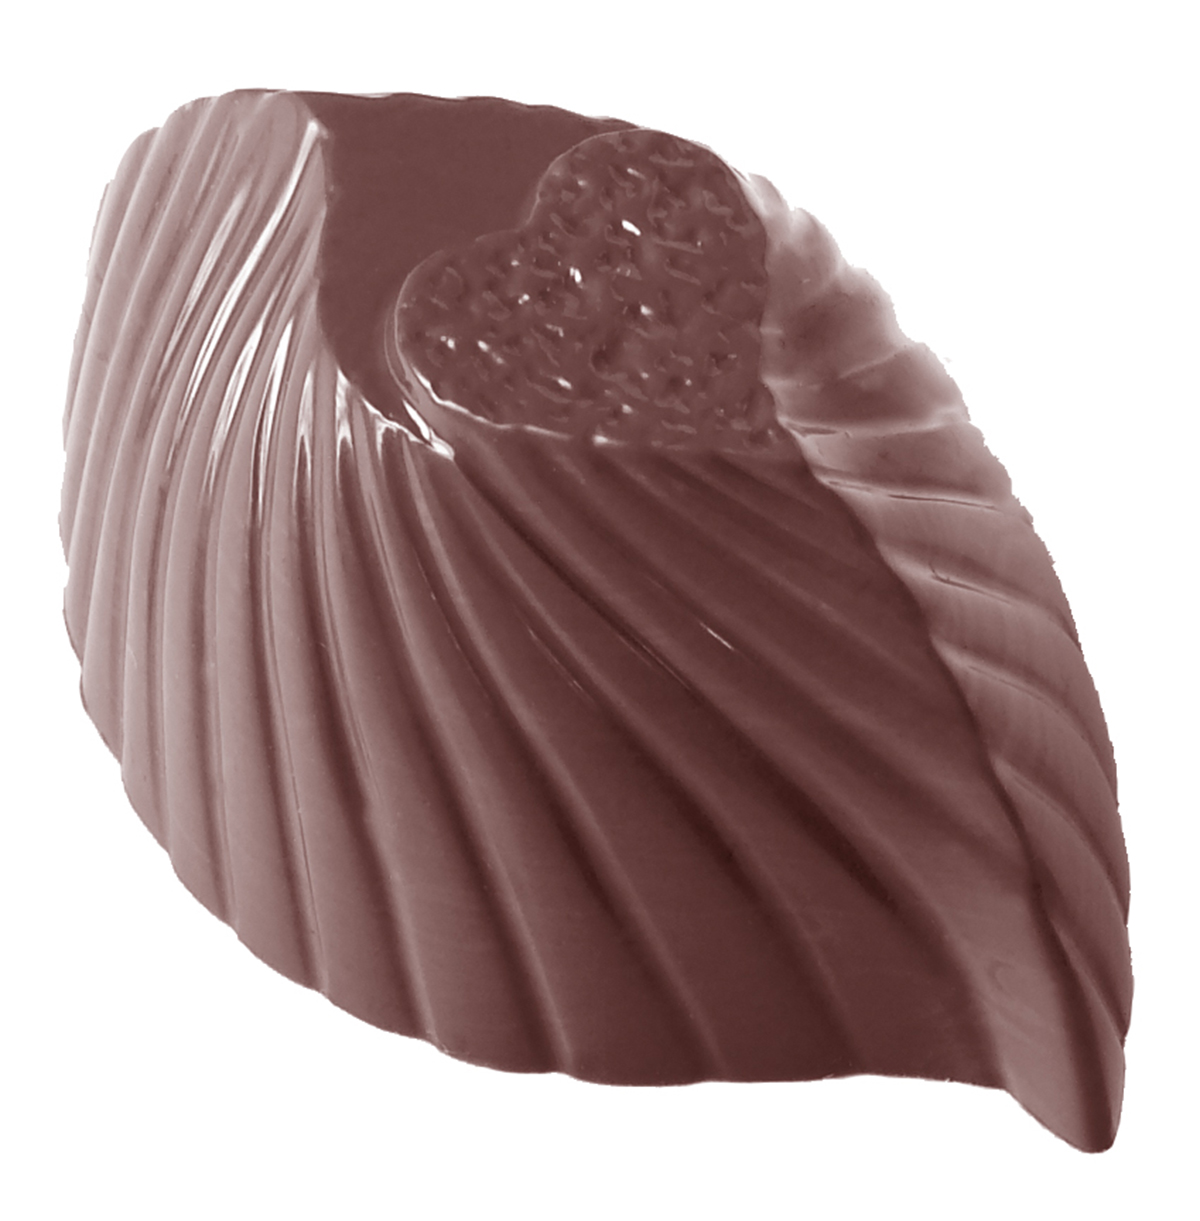 Billede af Professionel chokoladeform i polycarbonat - Classy heart CW1517